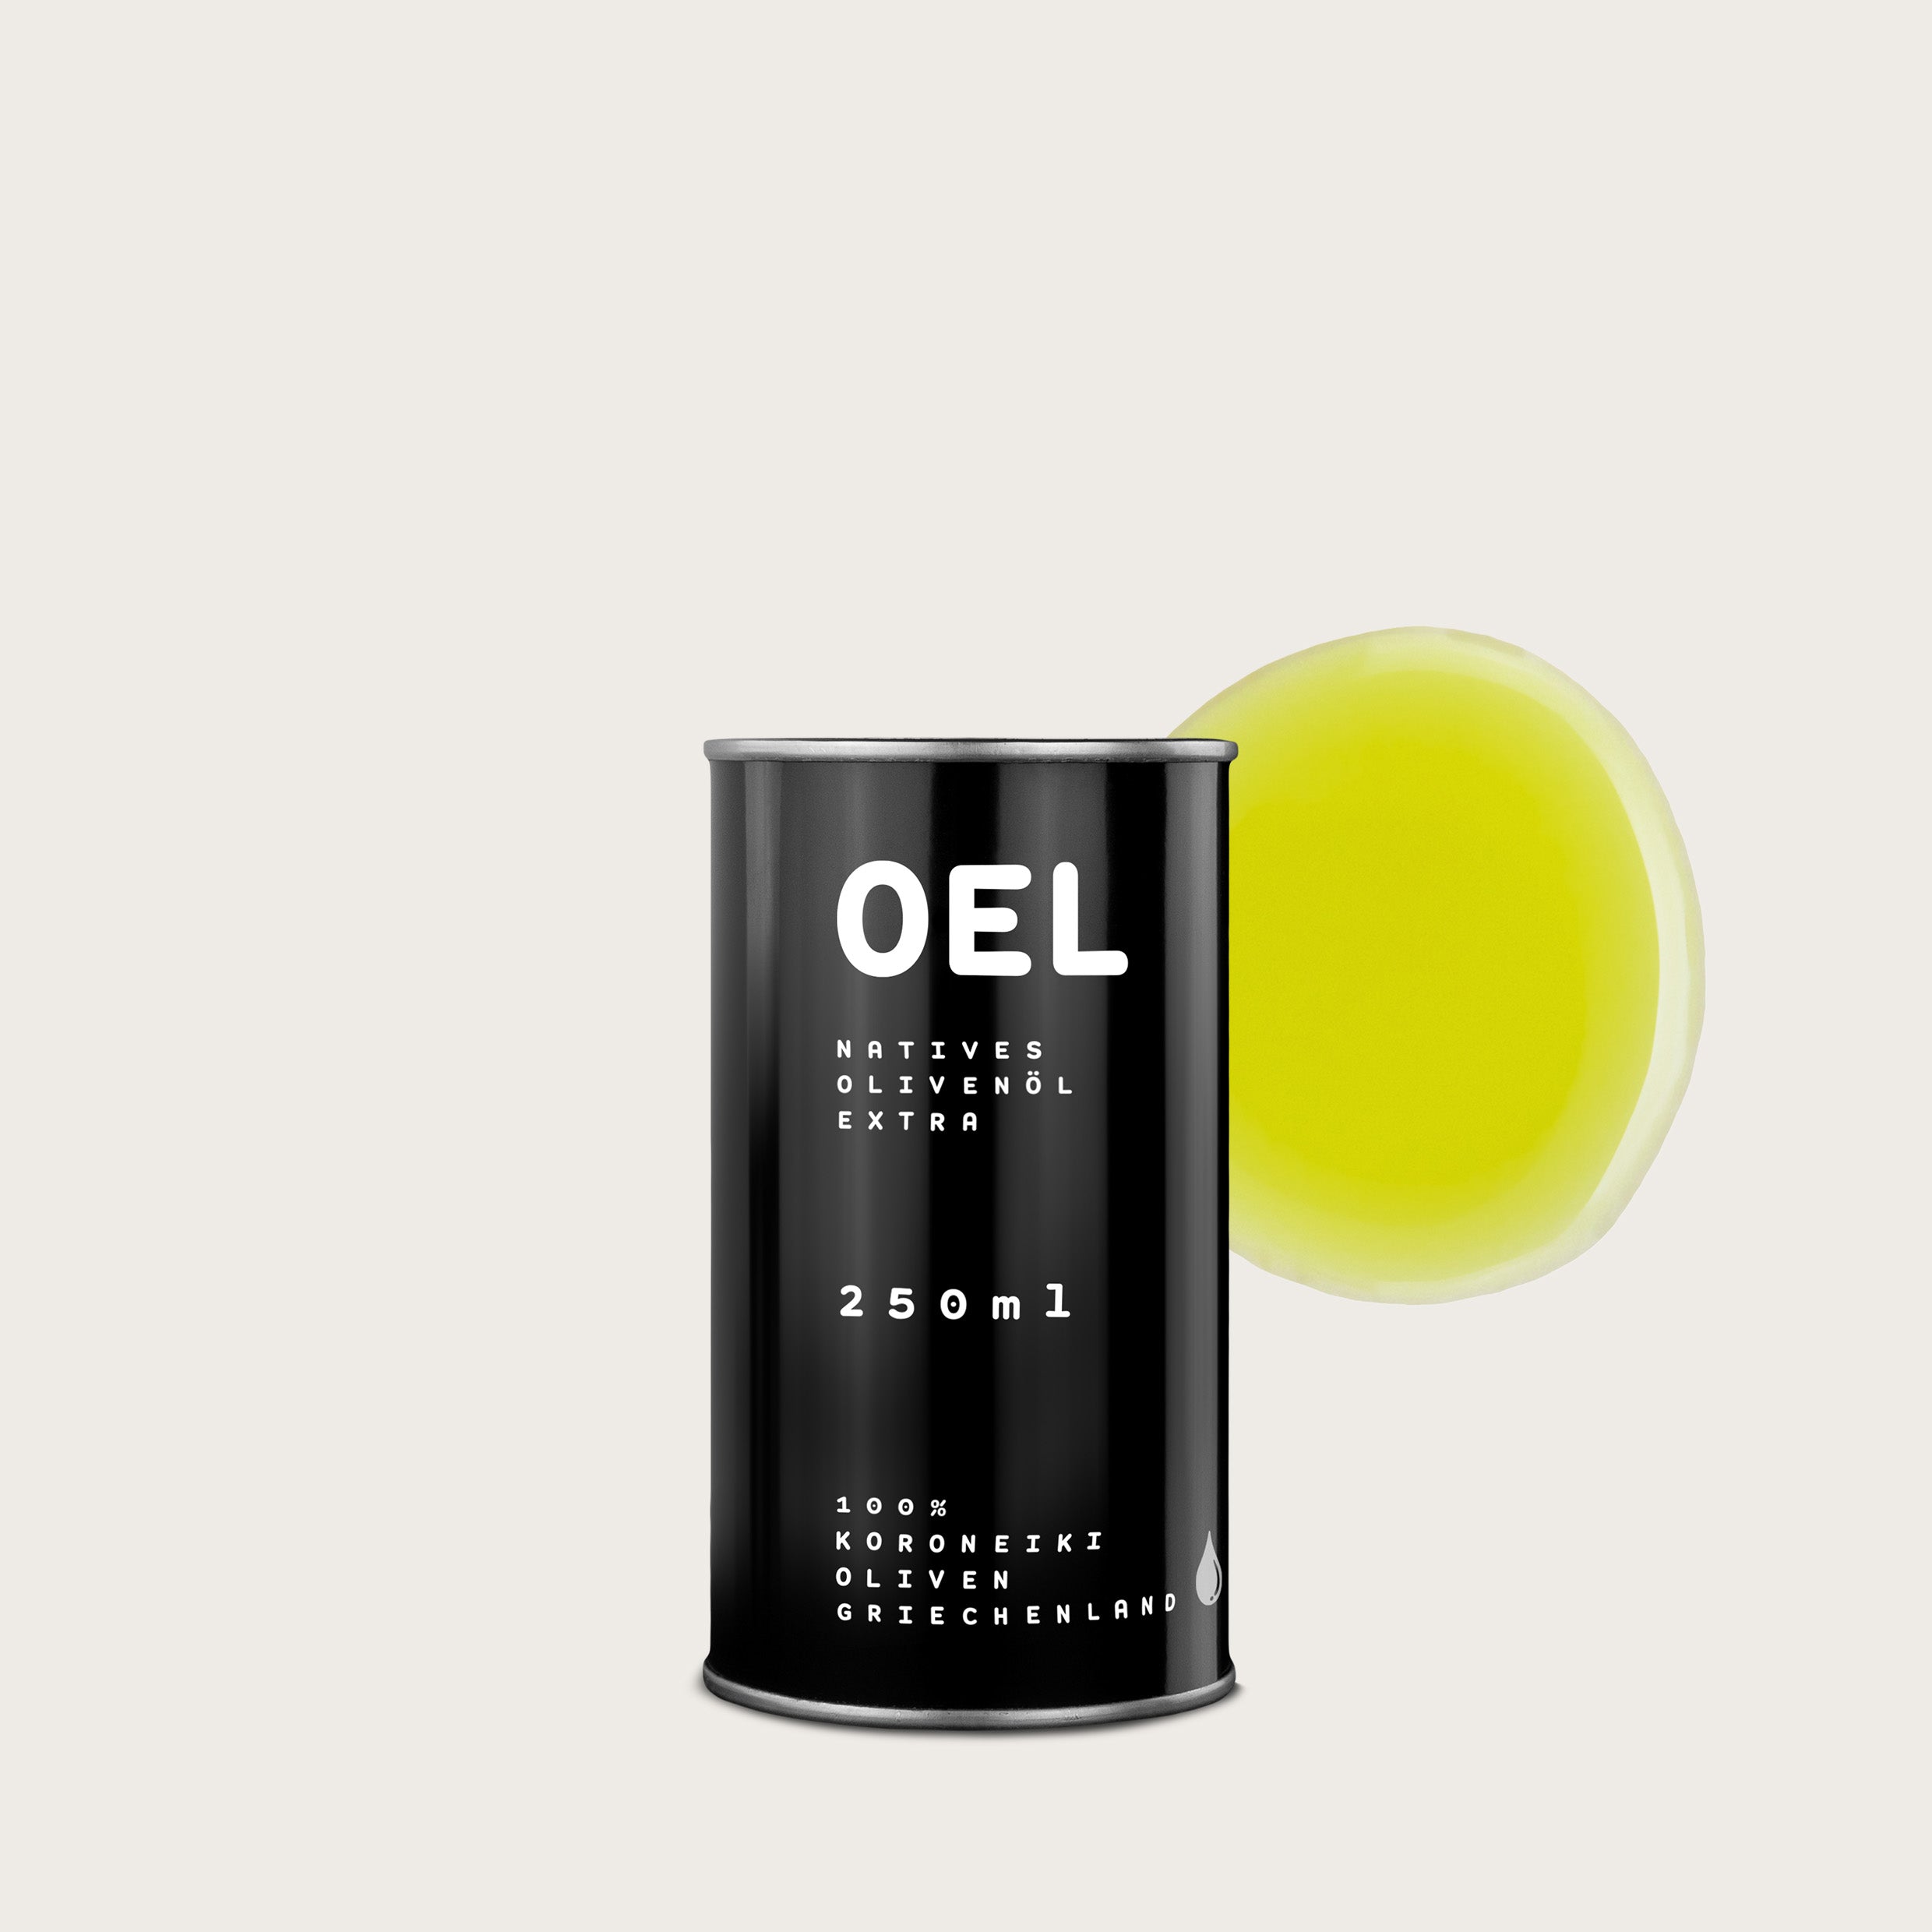 OEL 250 ml - Organic Extra Virgin Olive Oil from Greece